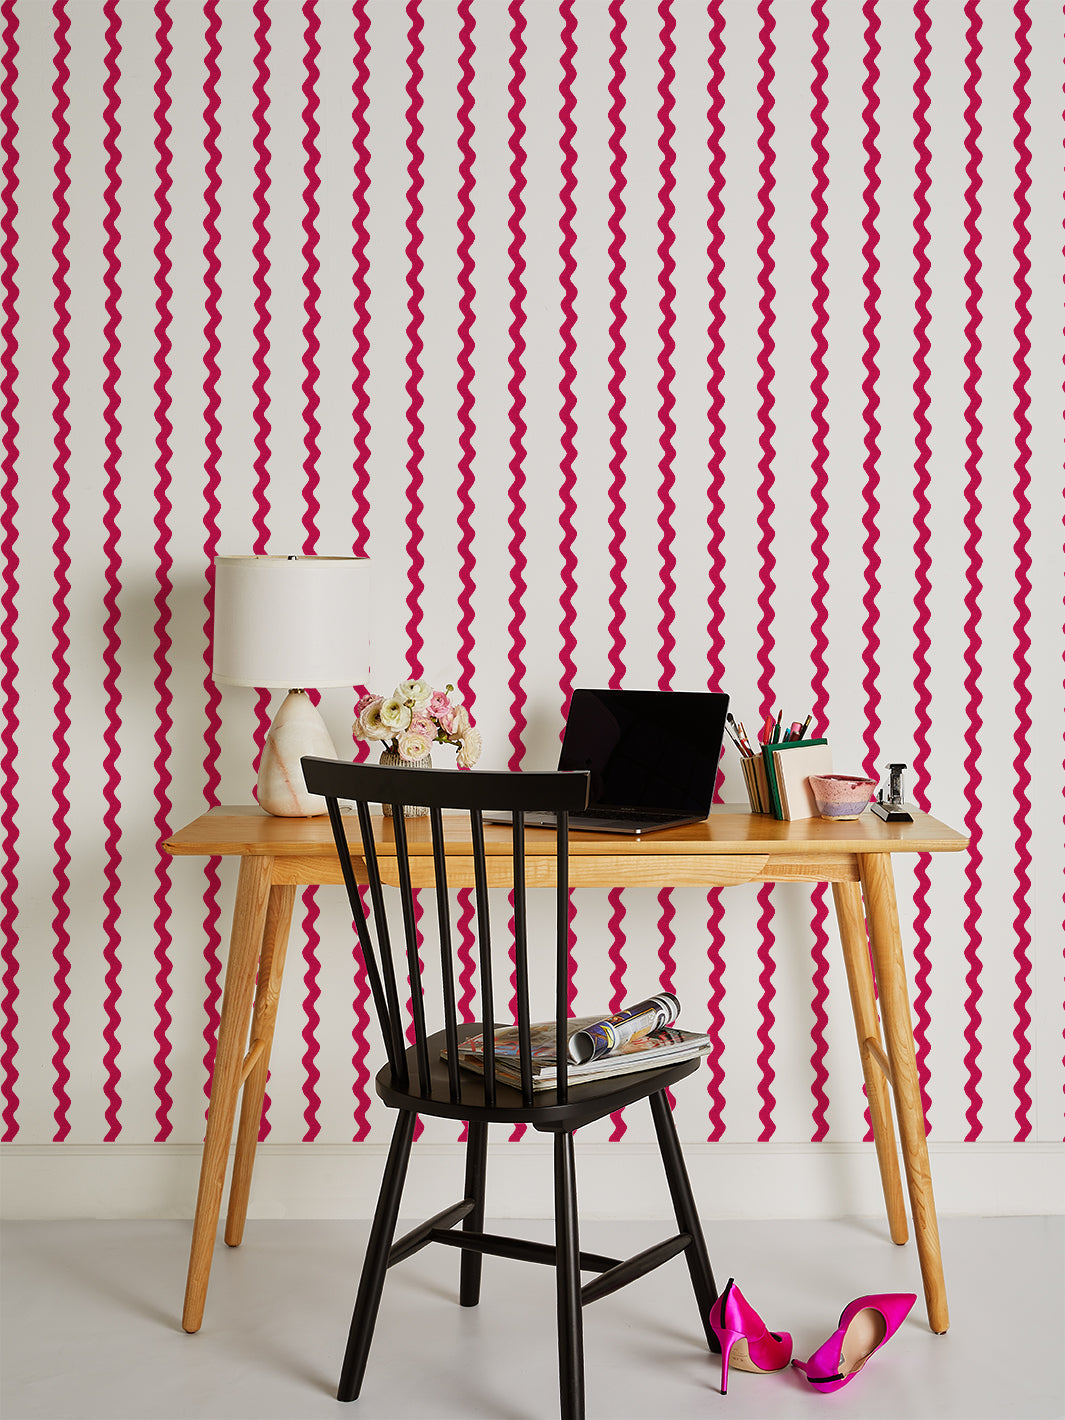 'Ric-Rac Stripe on White' Wallpaper by Sarah Jessica Parker - Geranium